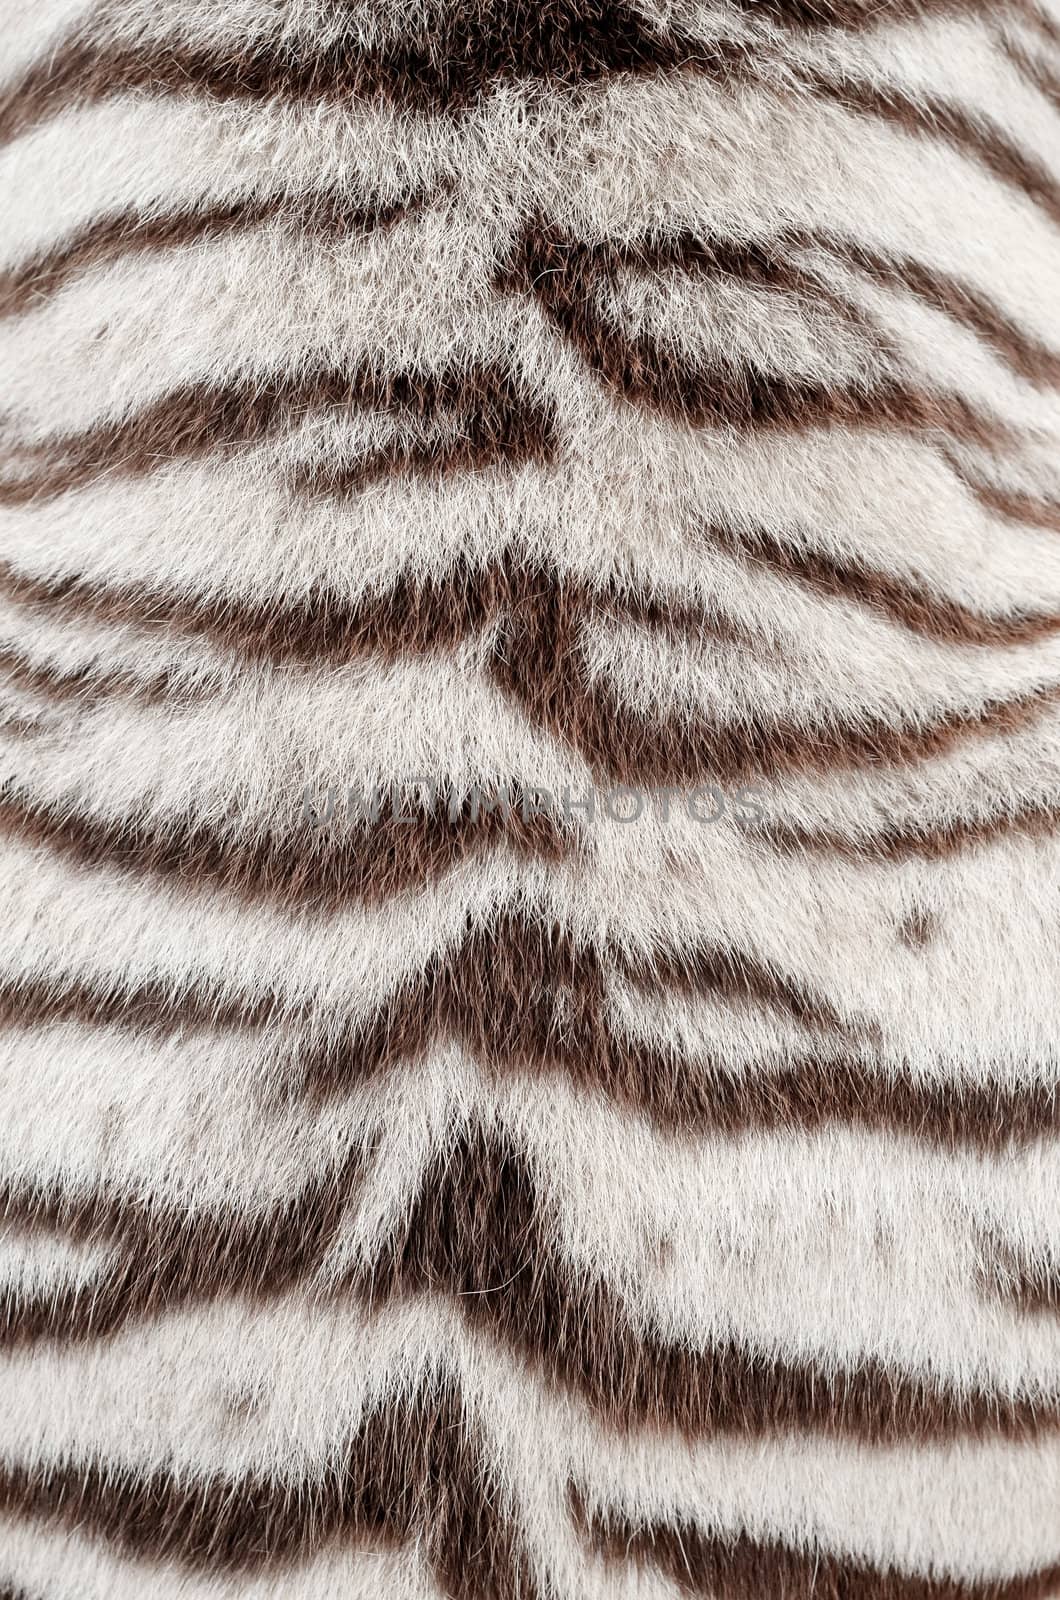 white bengal tiger fur by anankkml